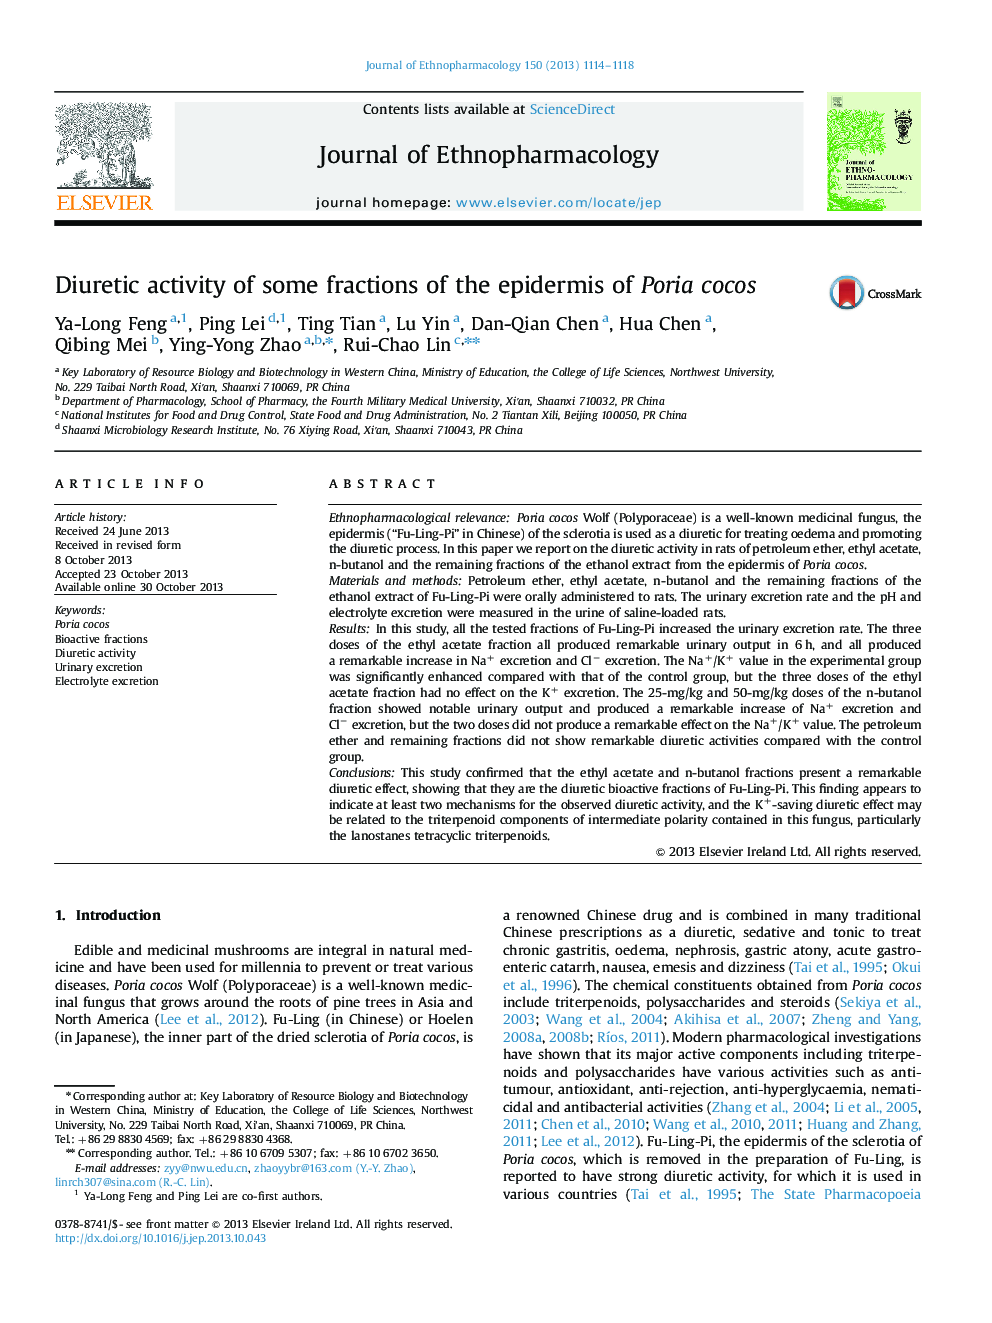 Diuretic activity of some fractions of the epidermis of Poria cocos